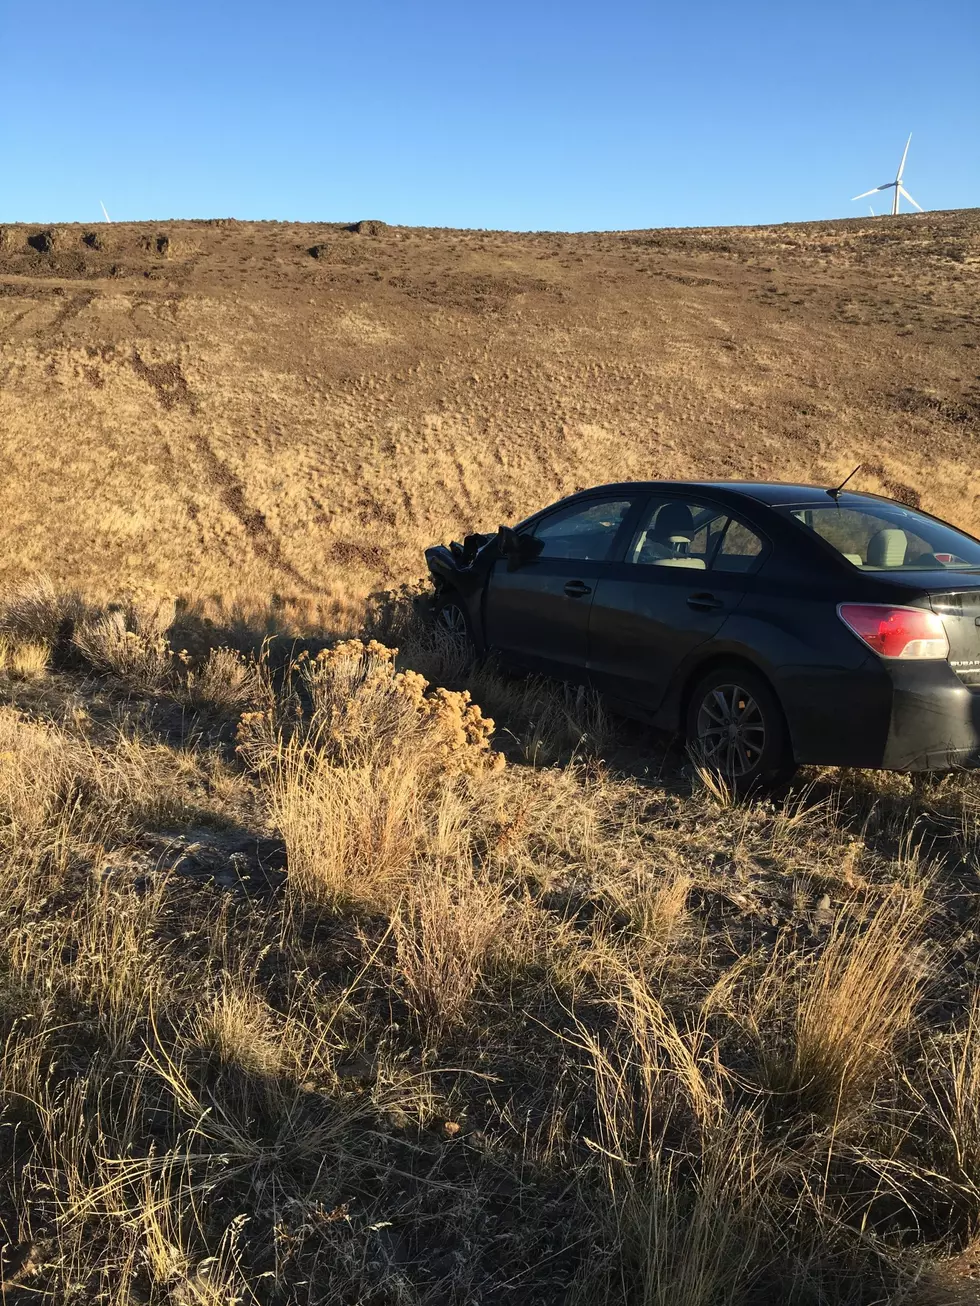 Subaru Stops Just Short of 75 Foot Drop Post-Wreck